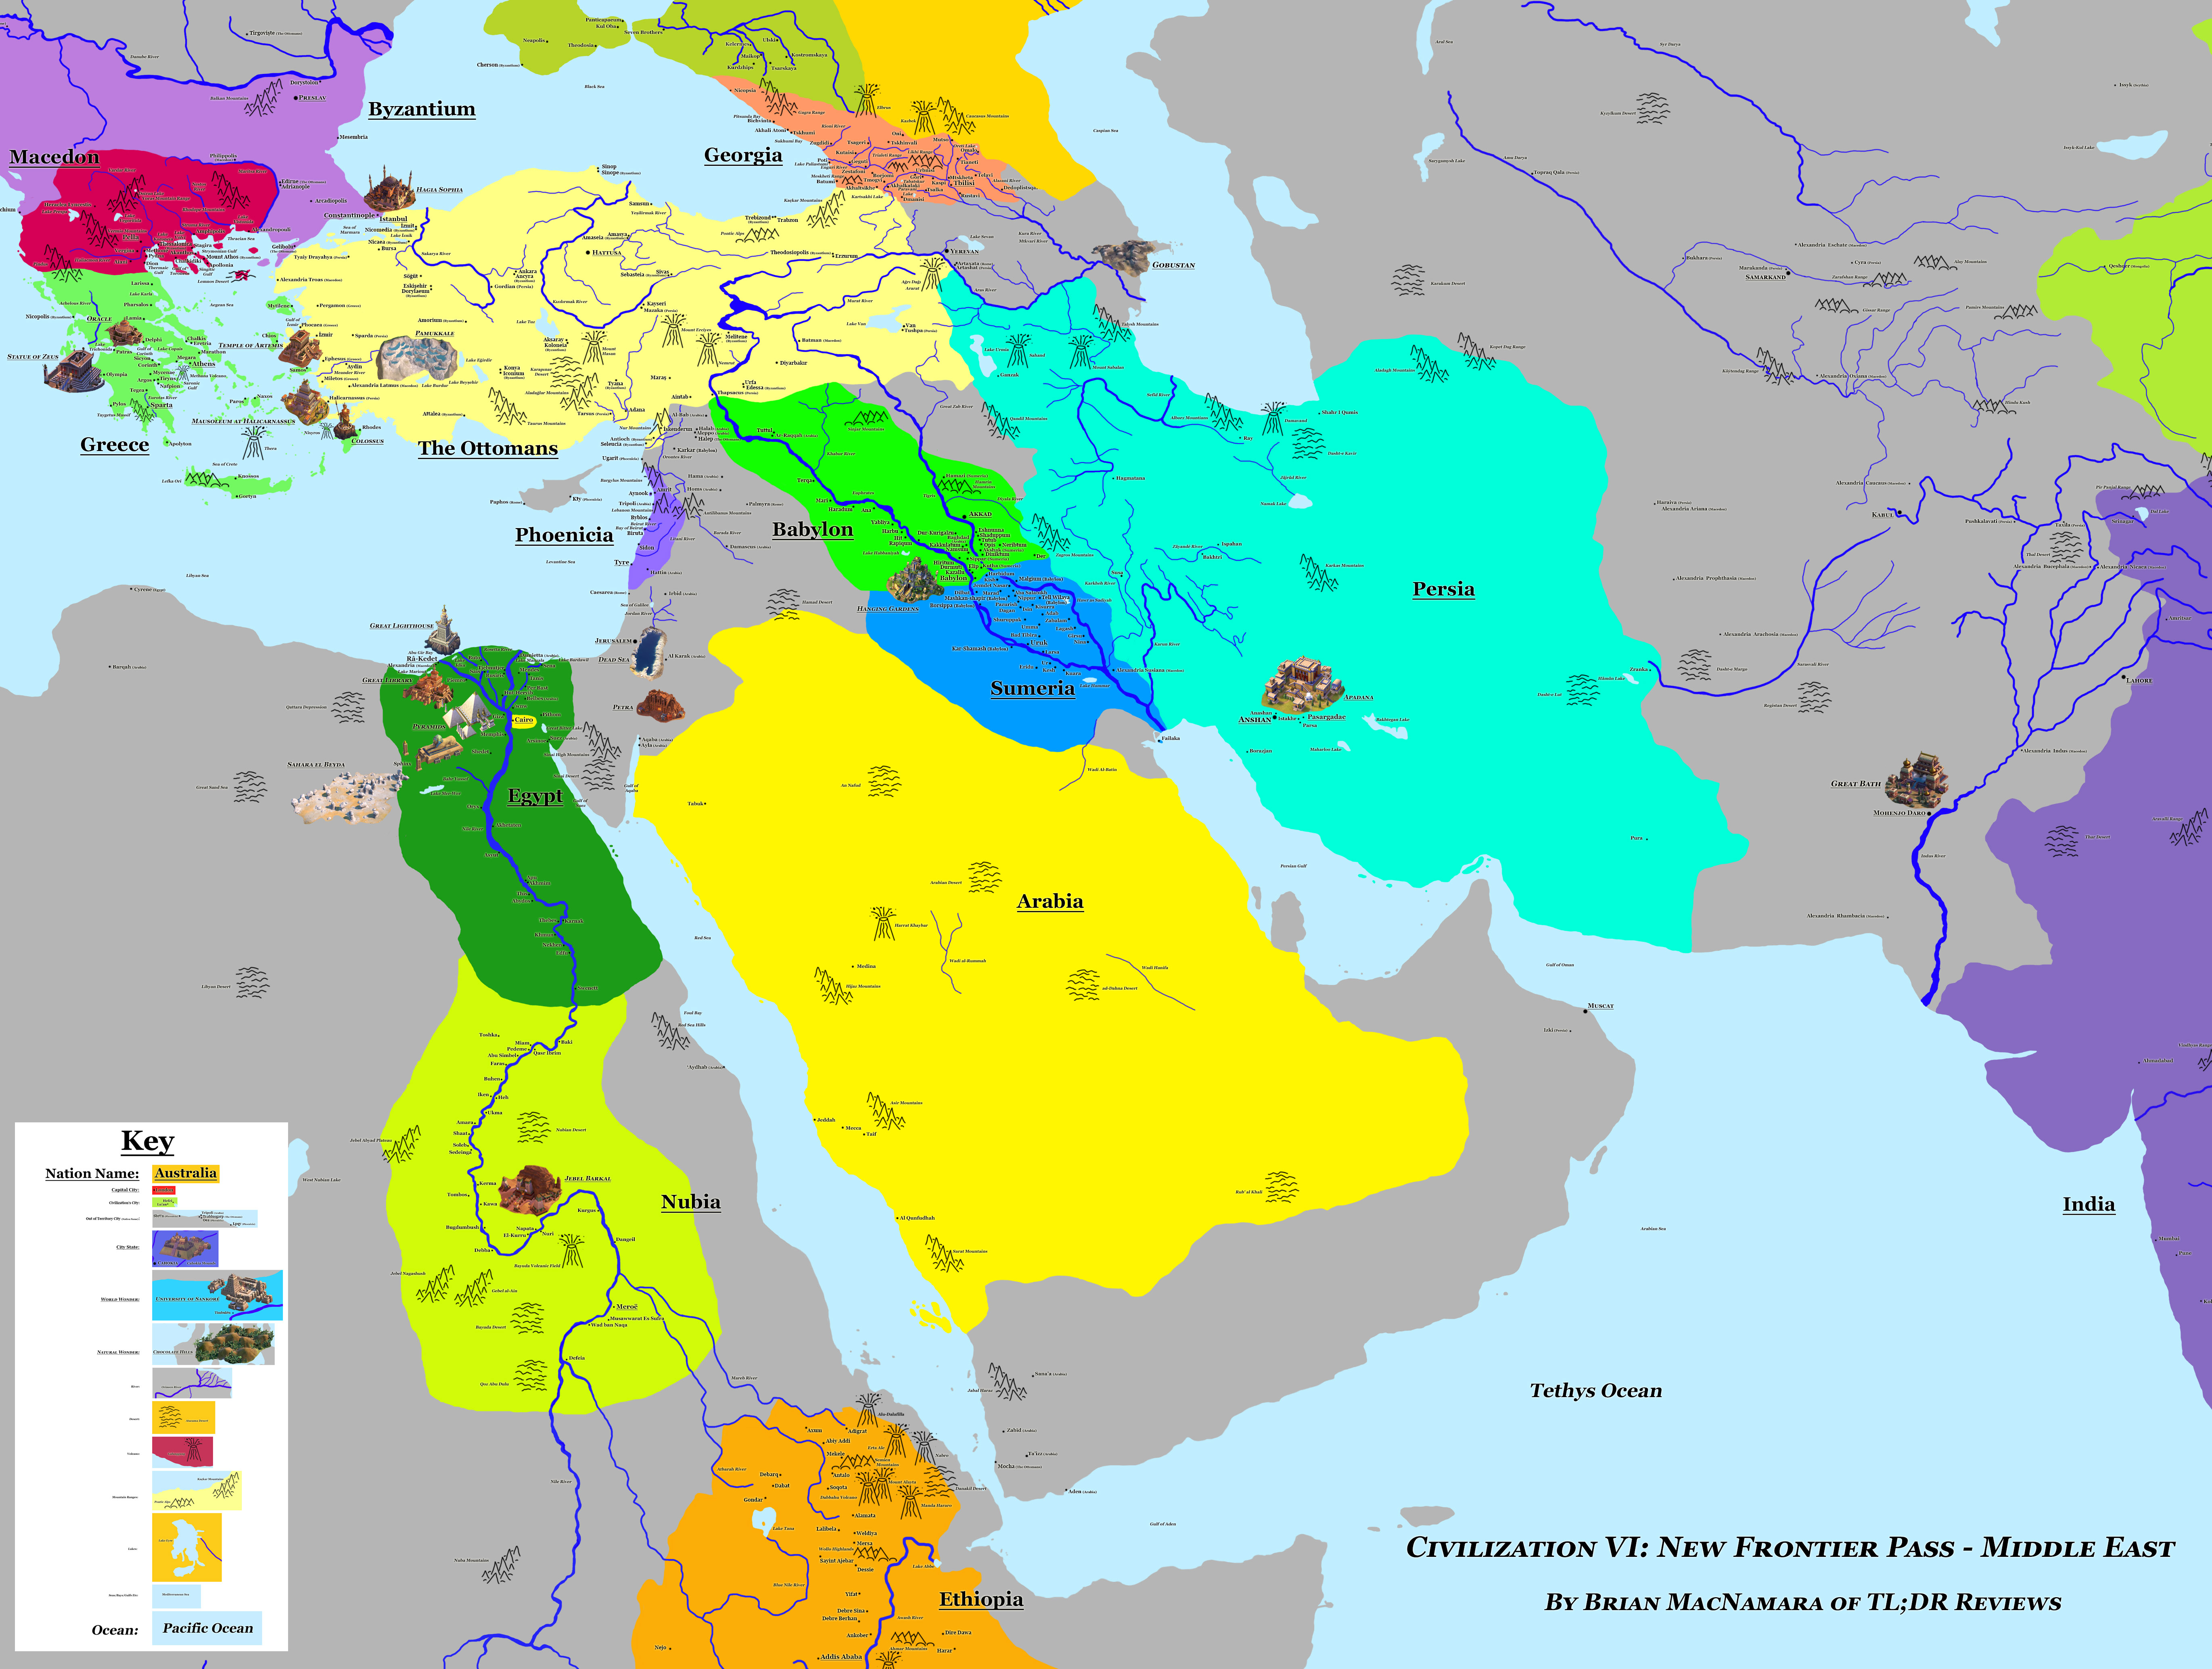 Middle East Map for Civilization VI. Image Credit: Brian MacNamara.